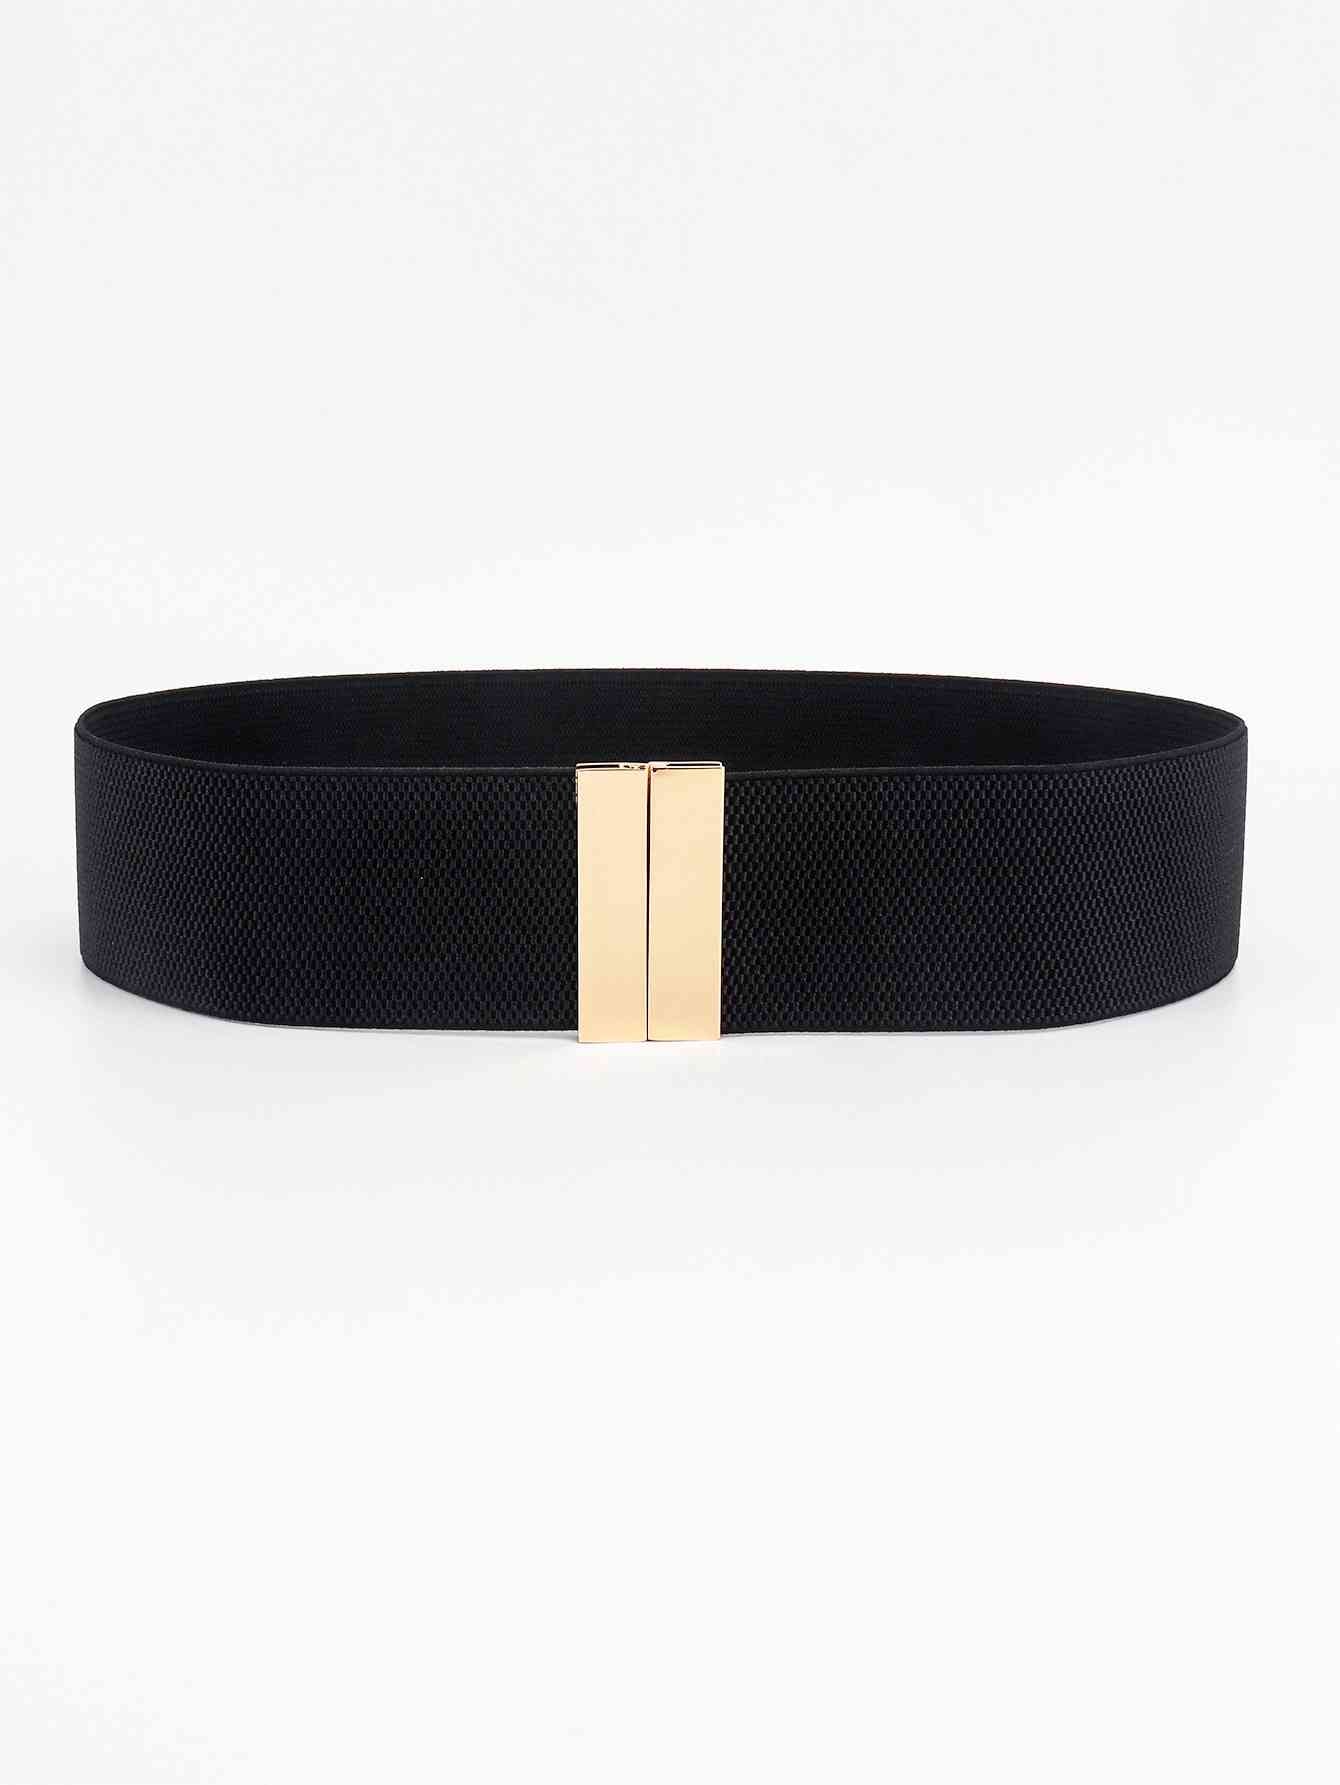 Alloy Buckle Elastic Belt Black/Gold One Size